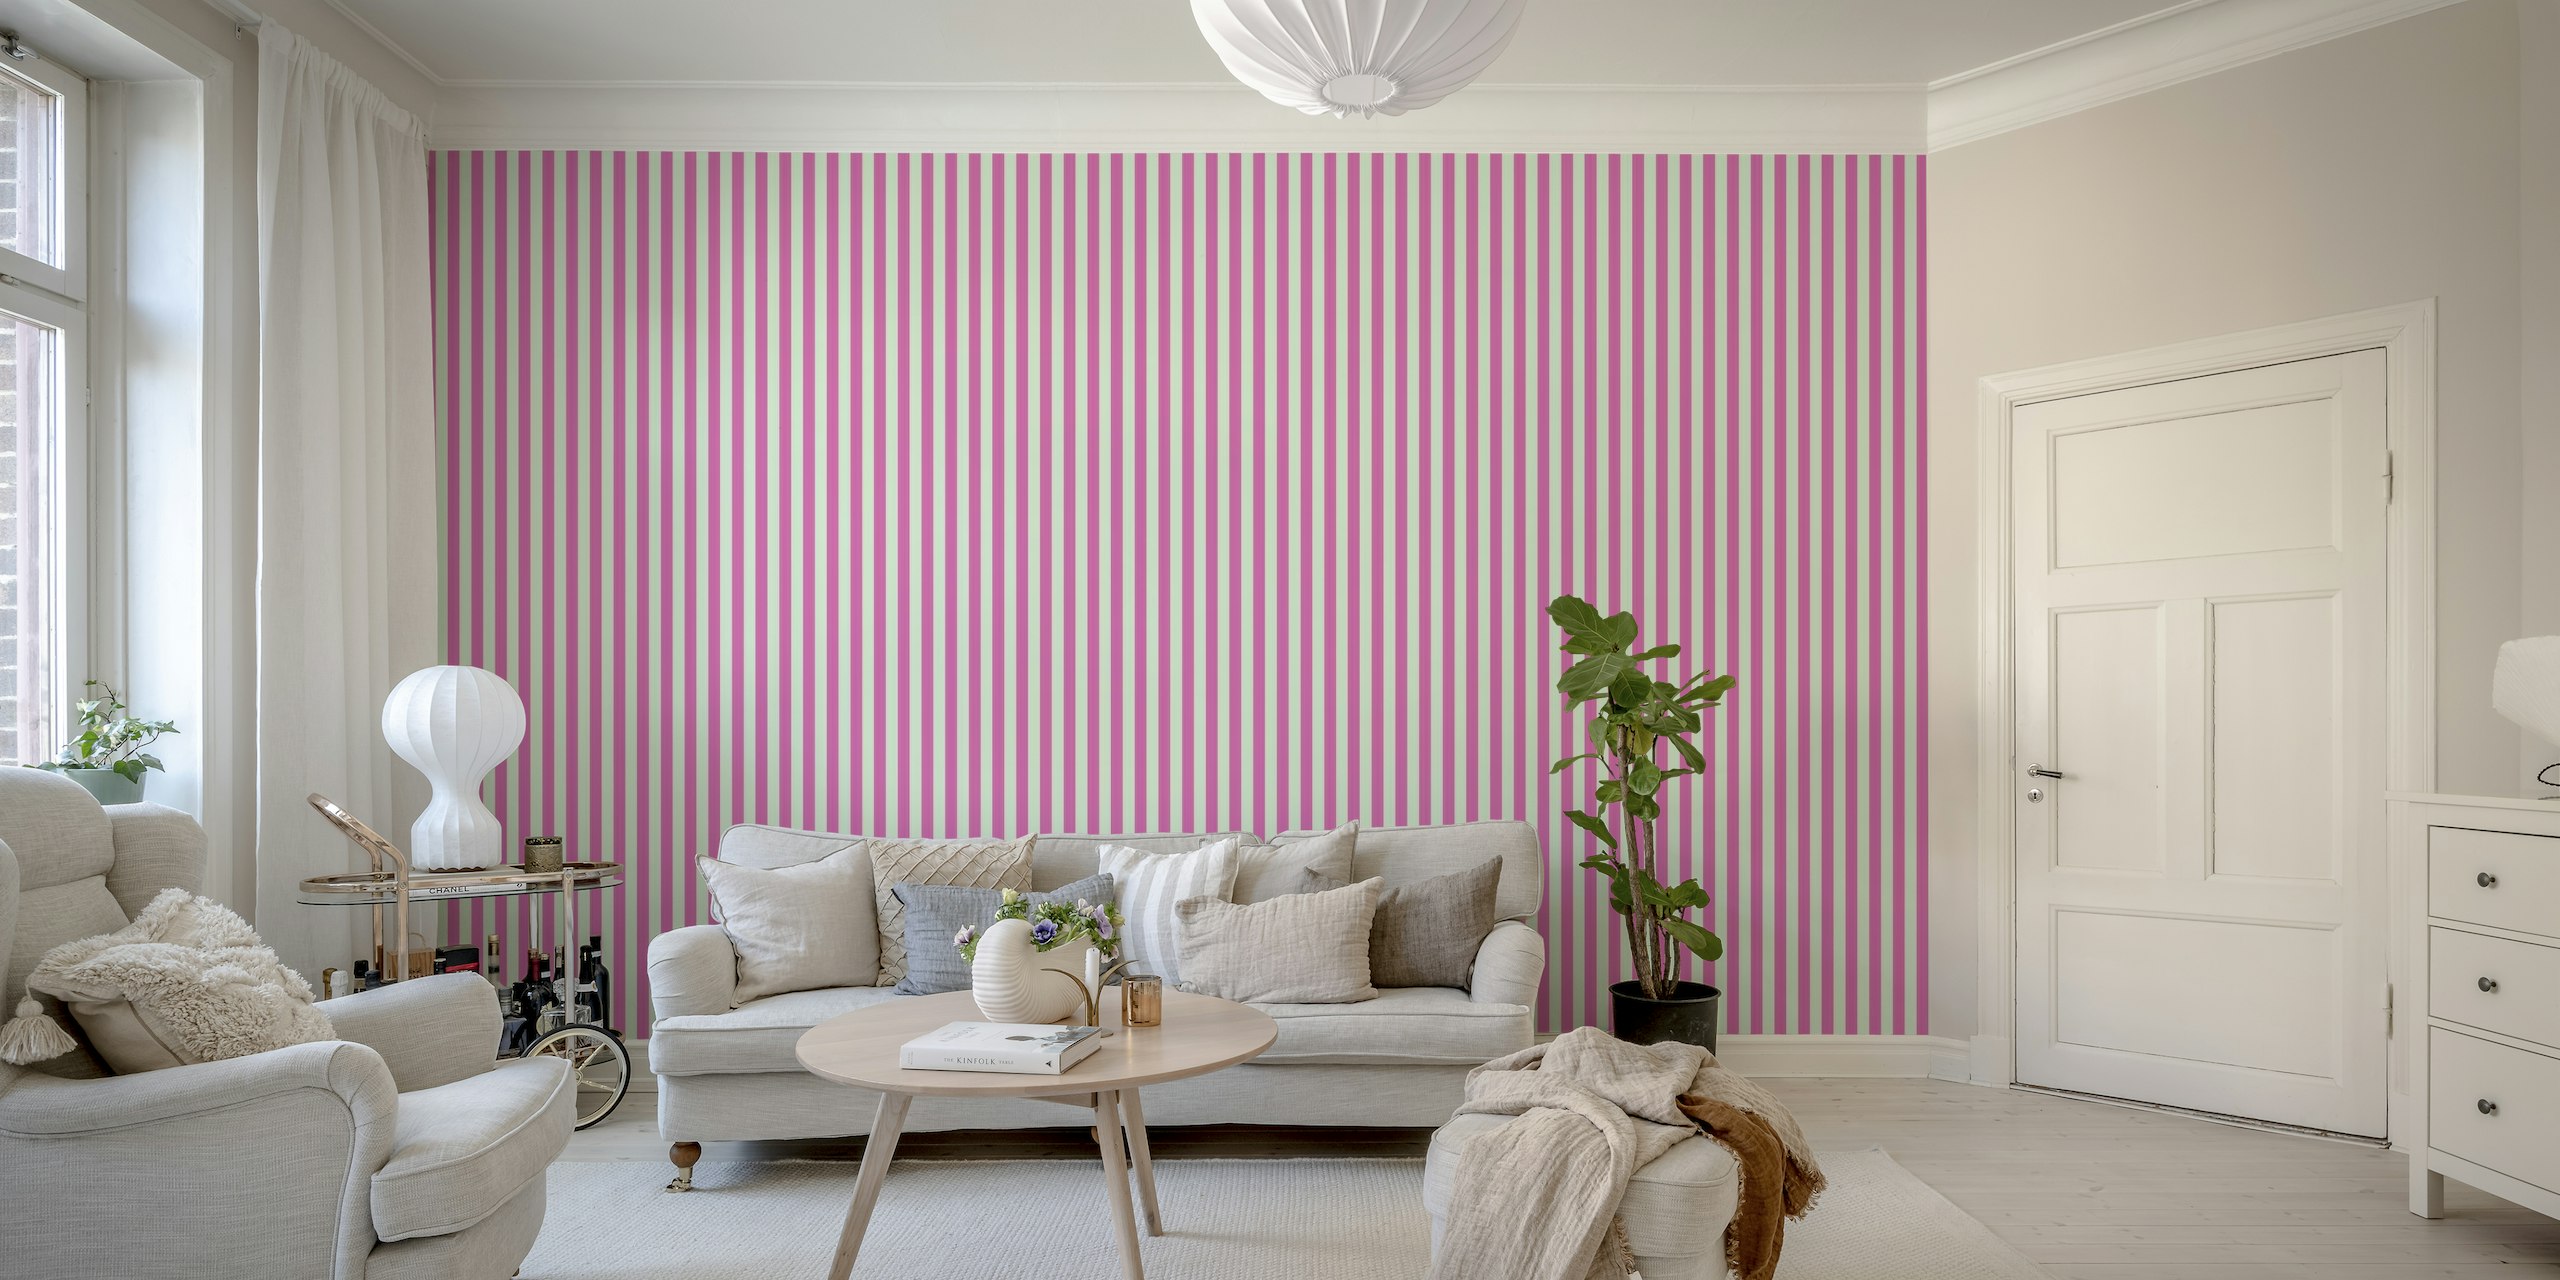 Mural de parede listrado rosa e menta